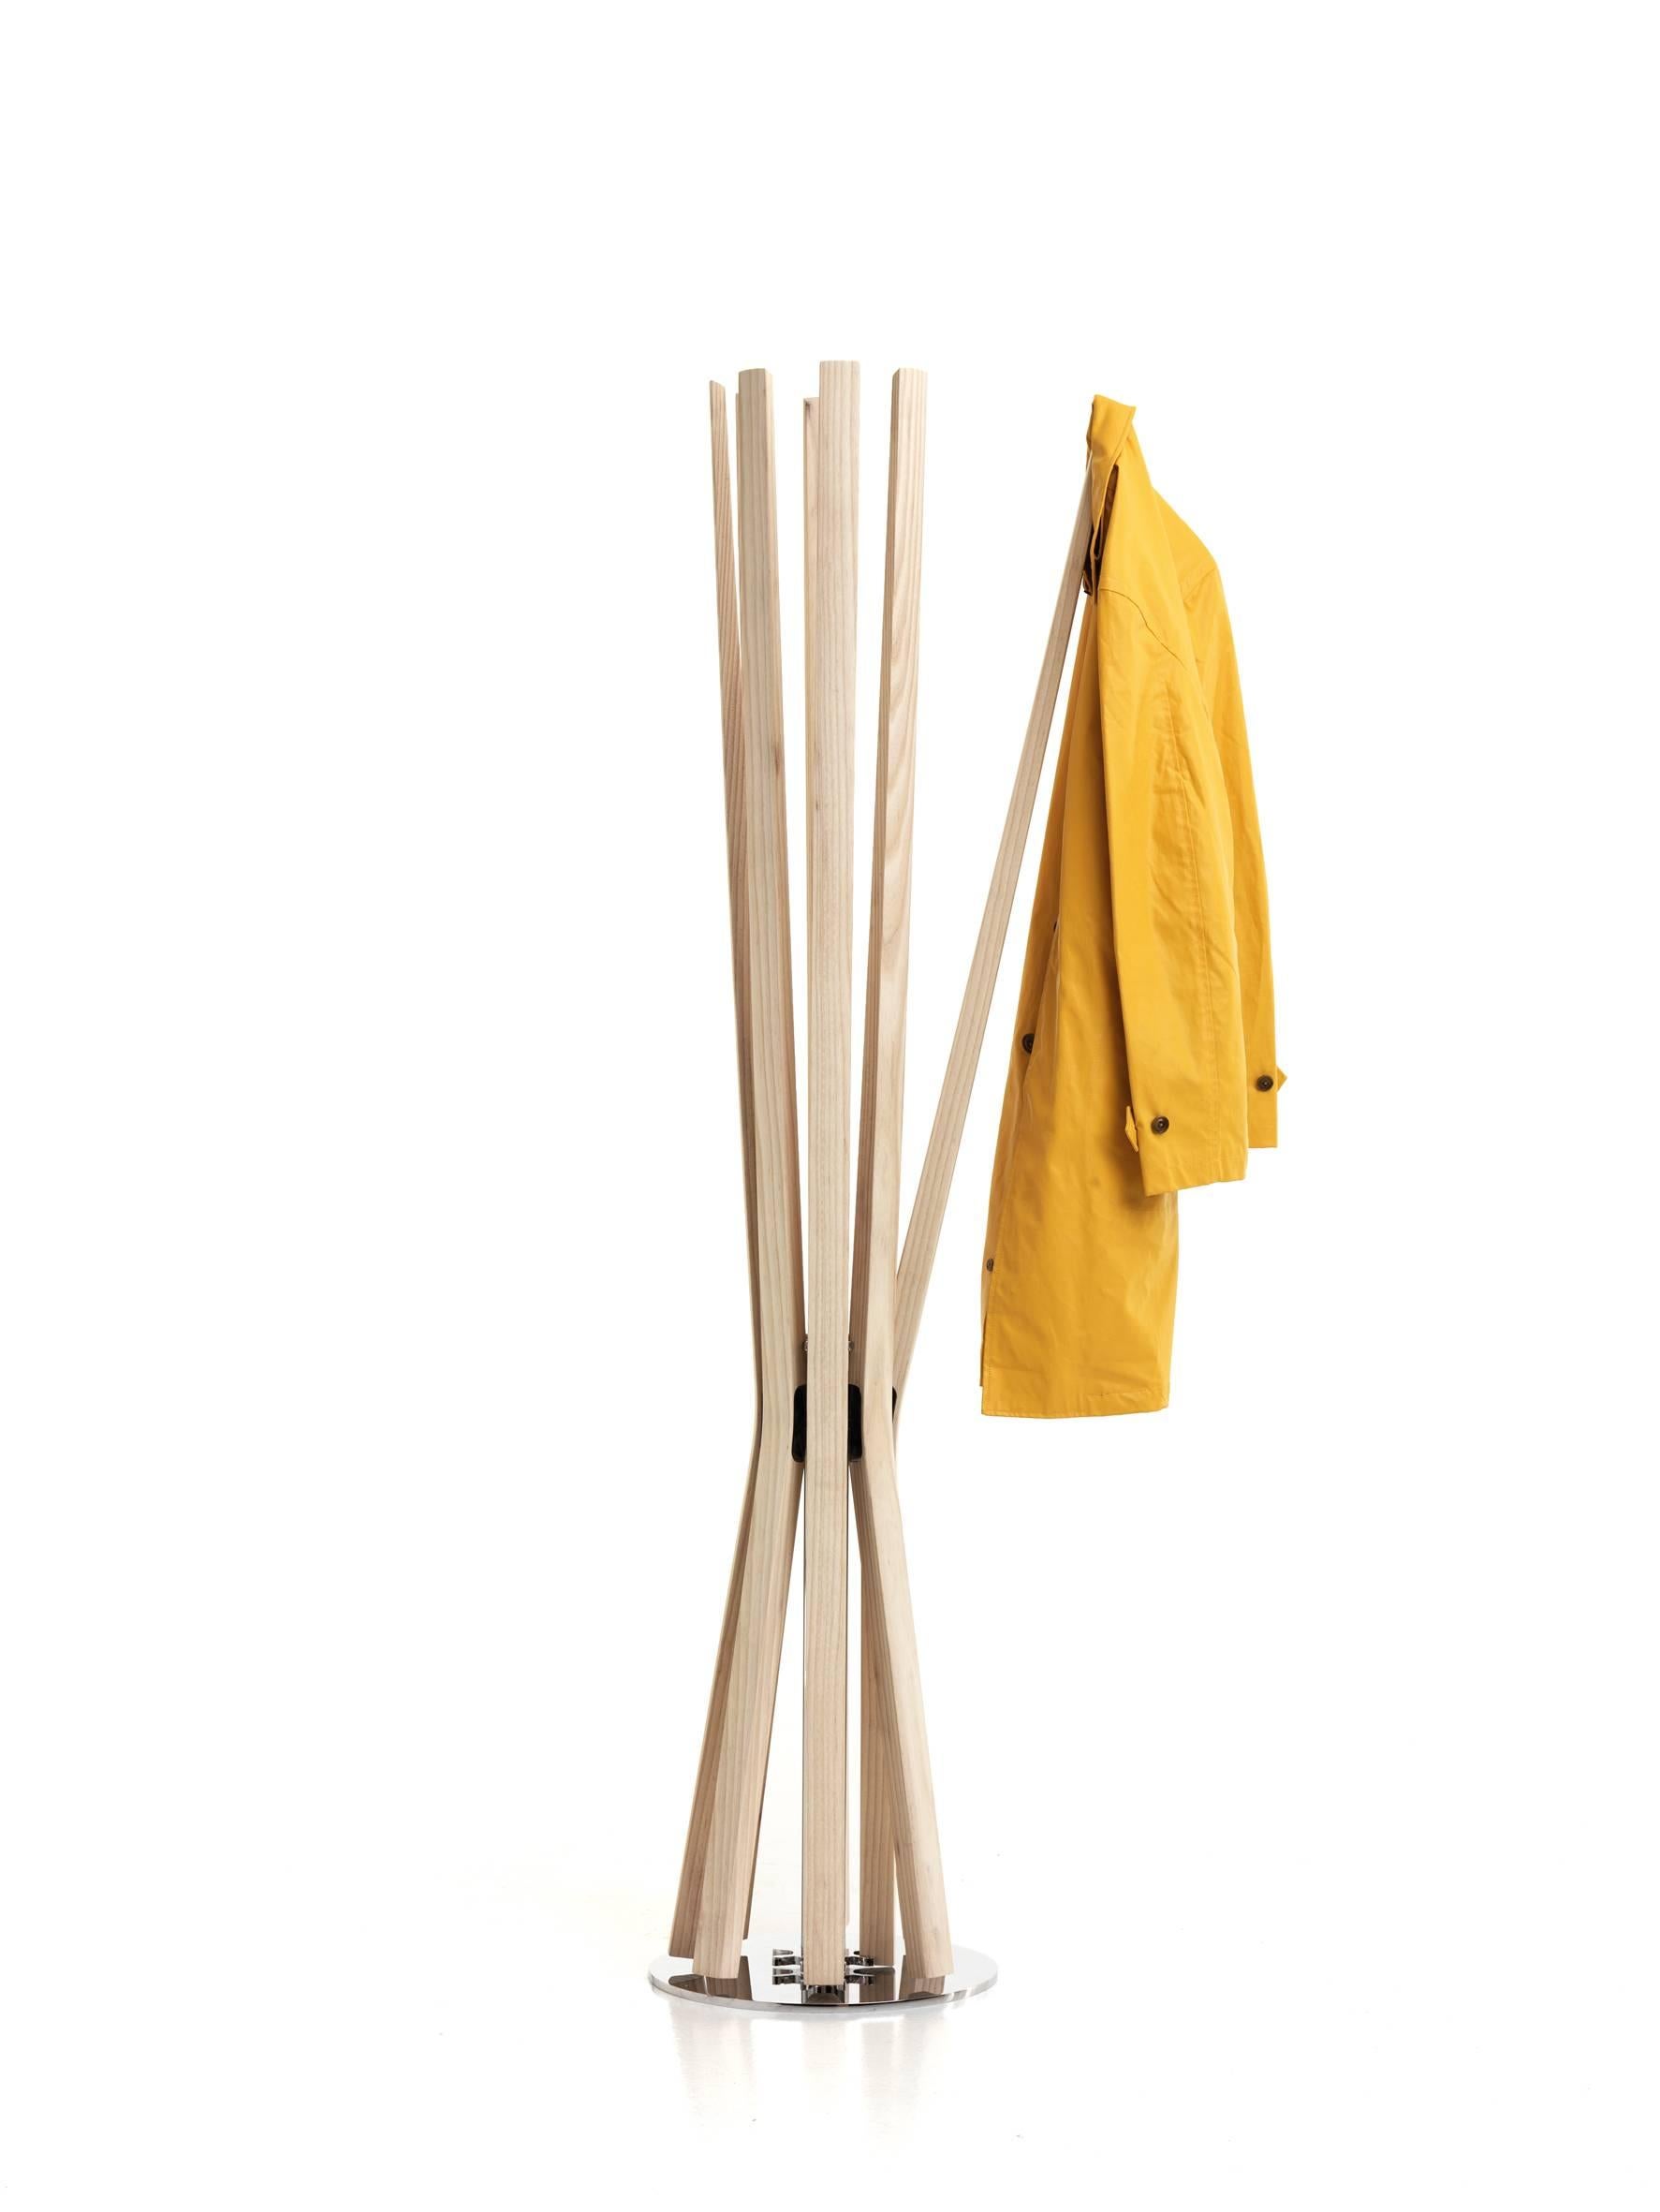 Modern Baleri Italia Bloom Coat Hanger in Solid Natural Material by Jeff Miller